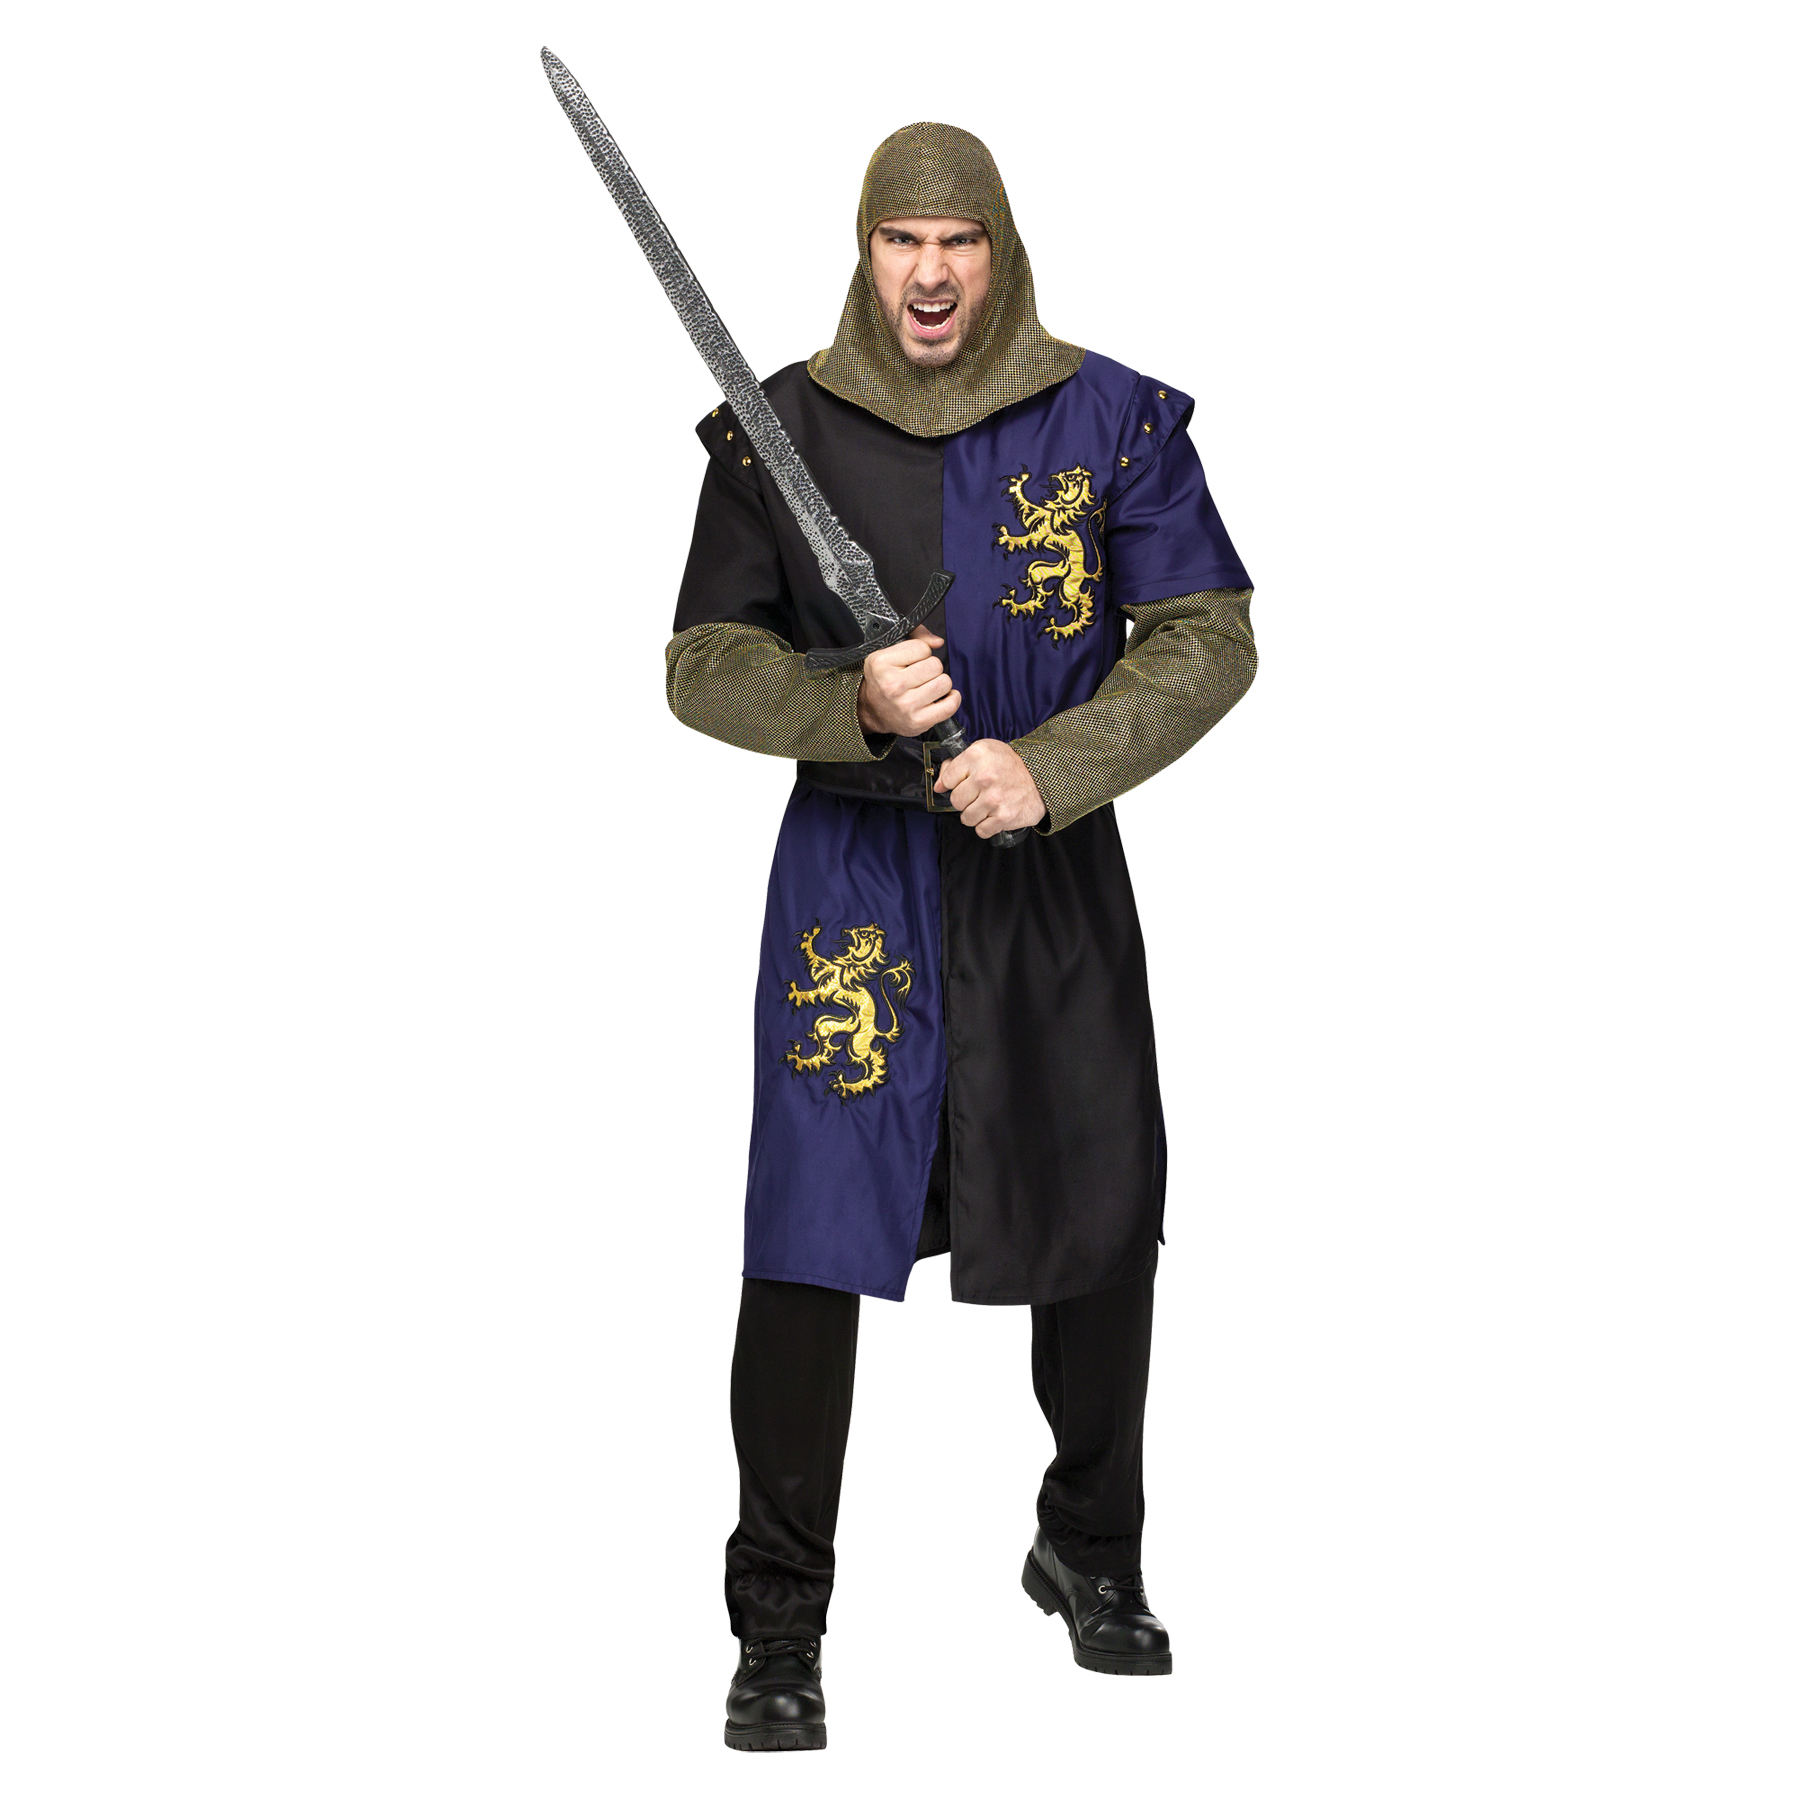 Men's Renaissance Knight Costume